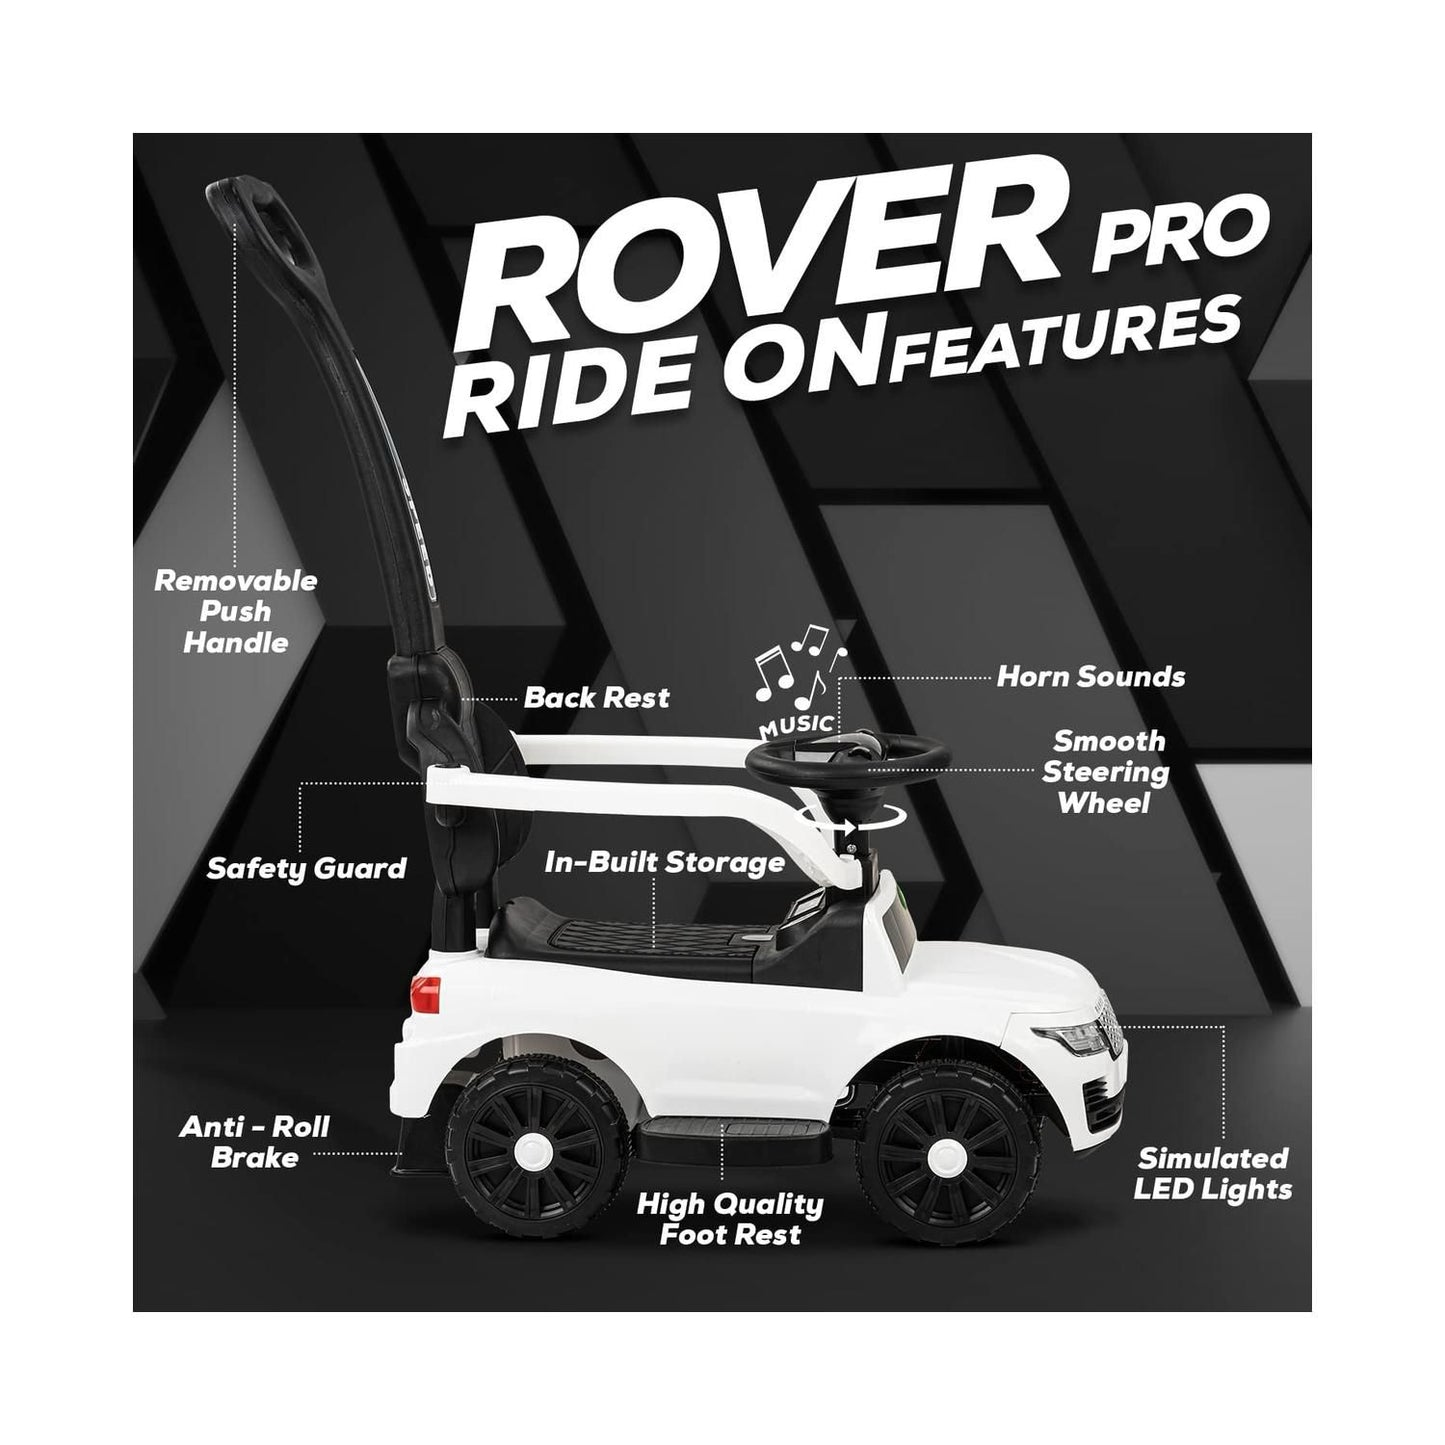 2-in-1 Range Rover Styled Push Car & Stroller